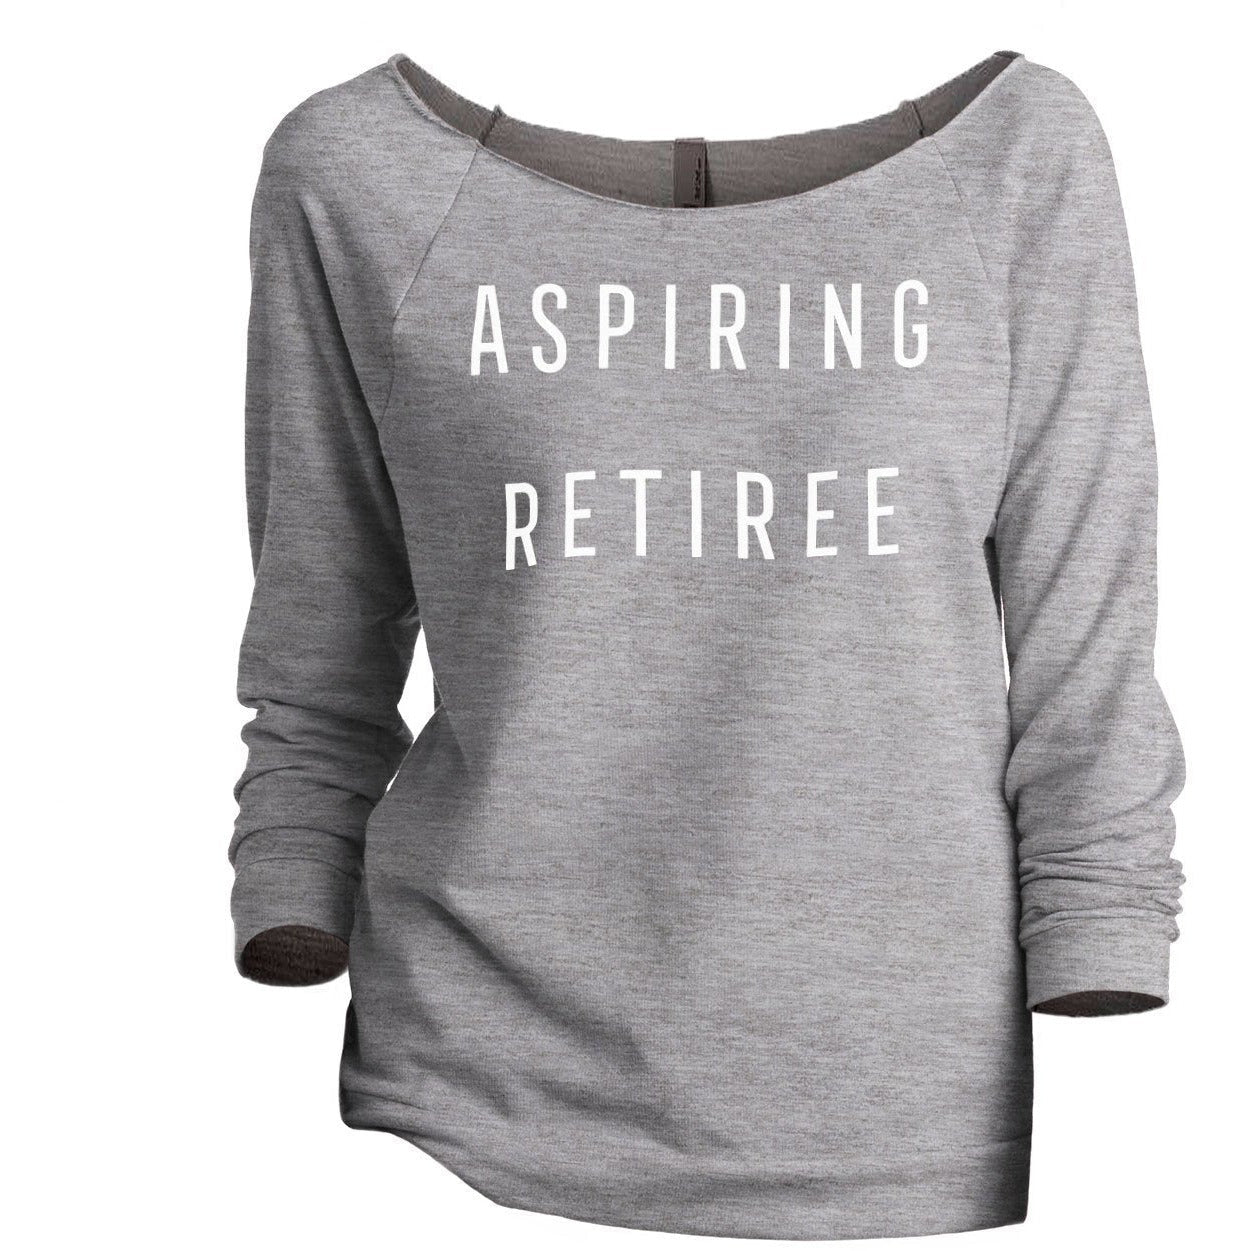 Aspiring Retiree - Stories You Can Wear